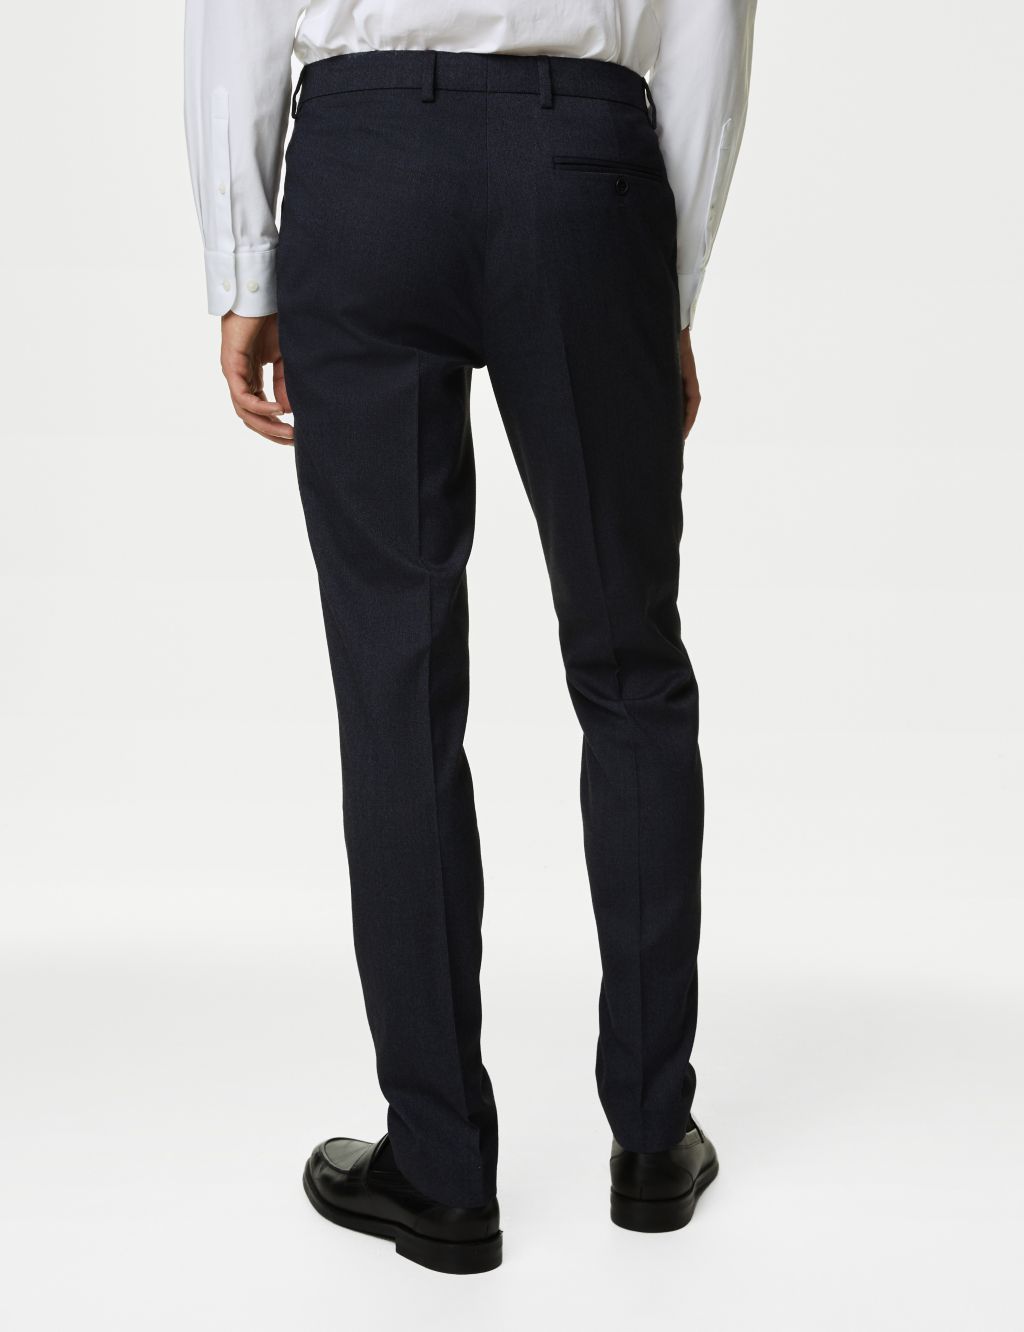 Slim Fit Stretch Textured Suit image 5